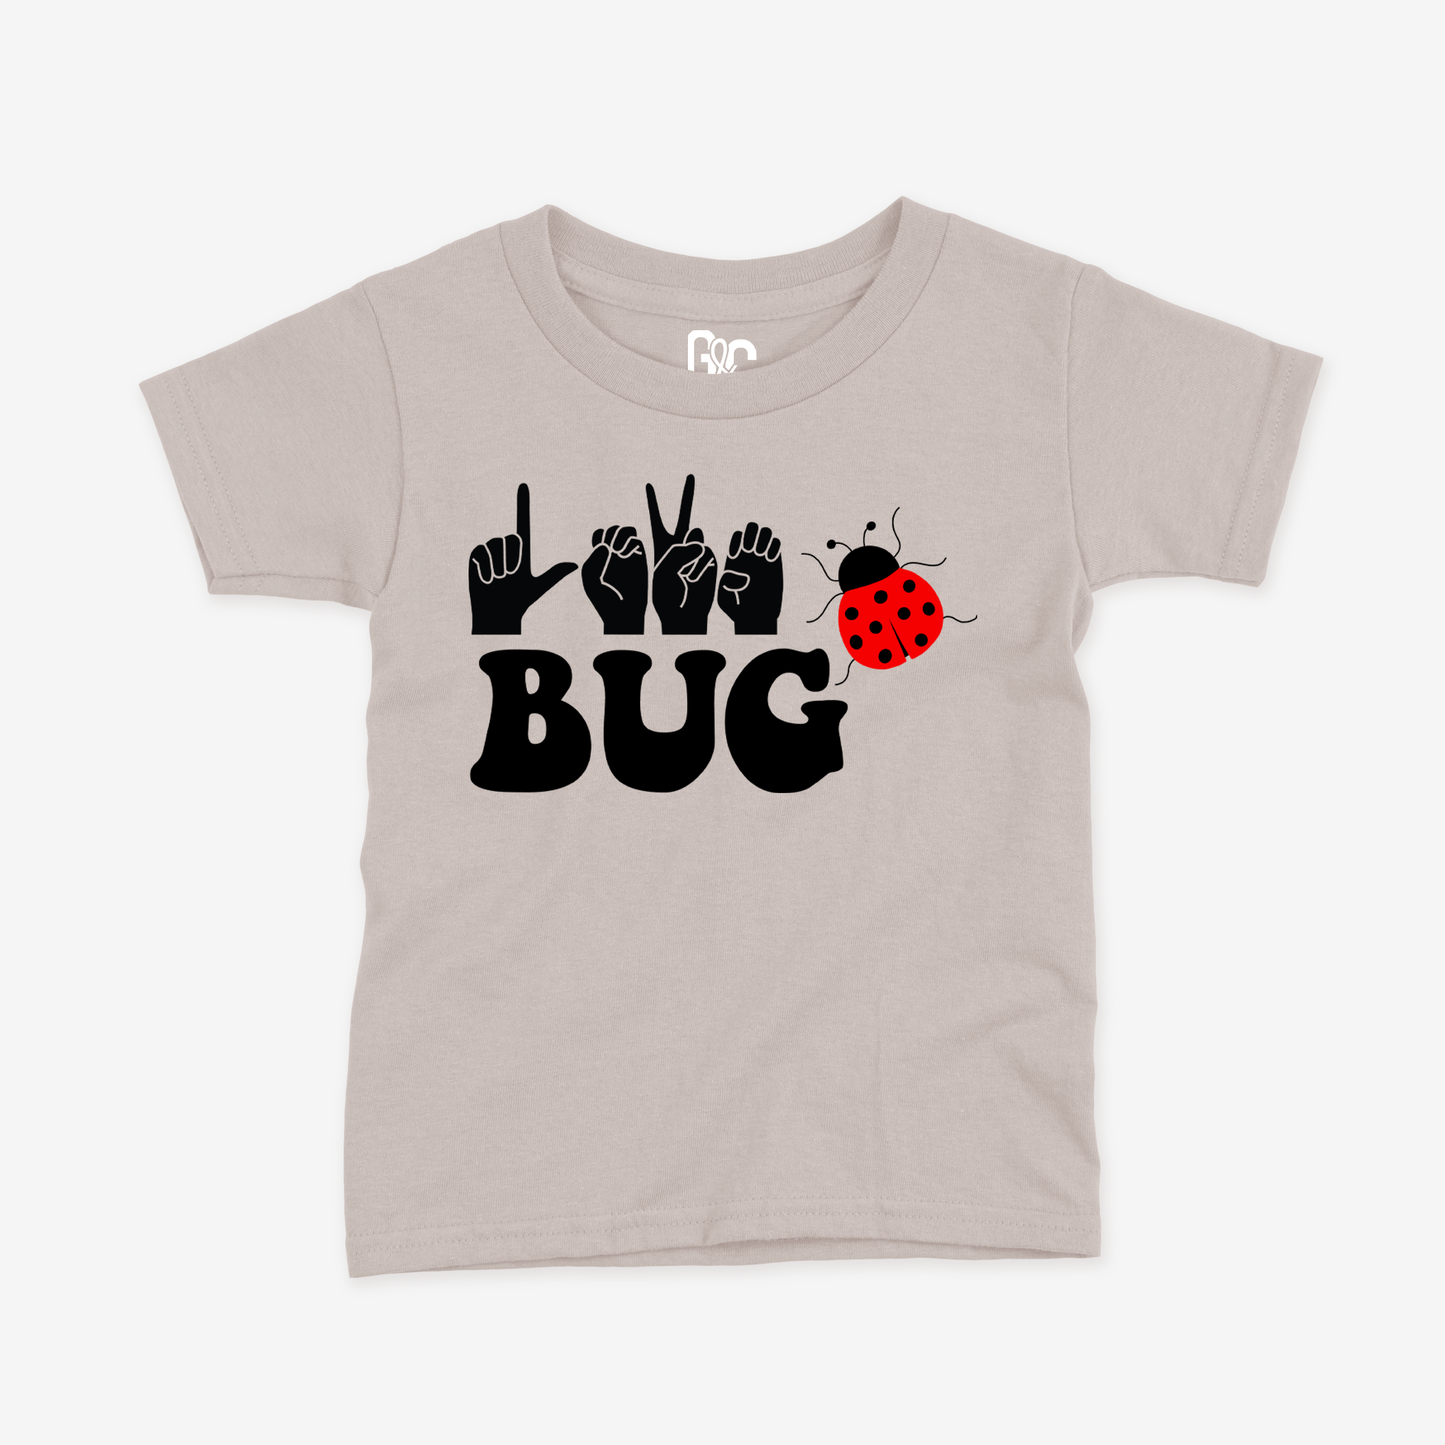 Love bug Toddler Tee